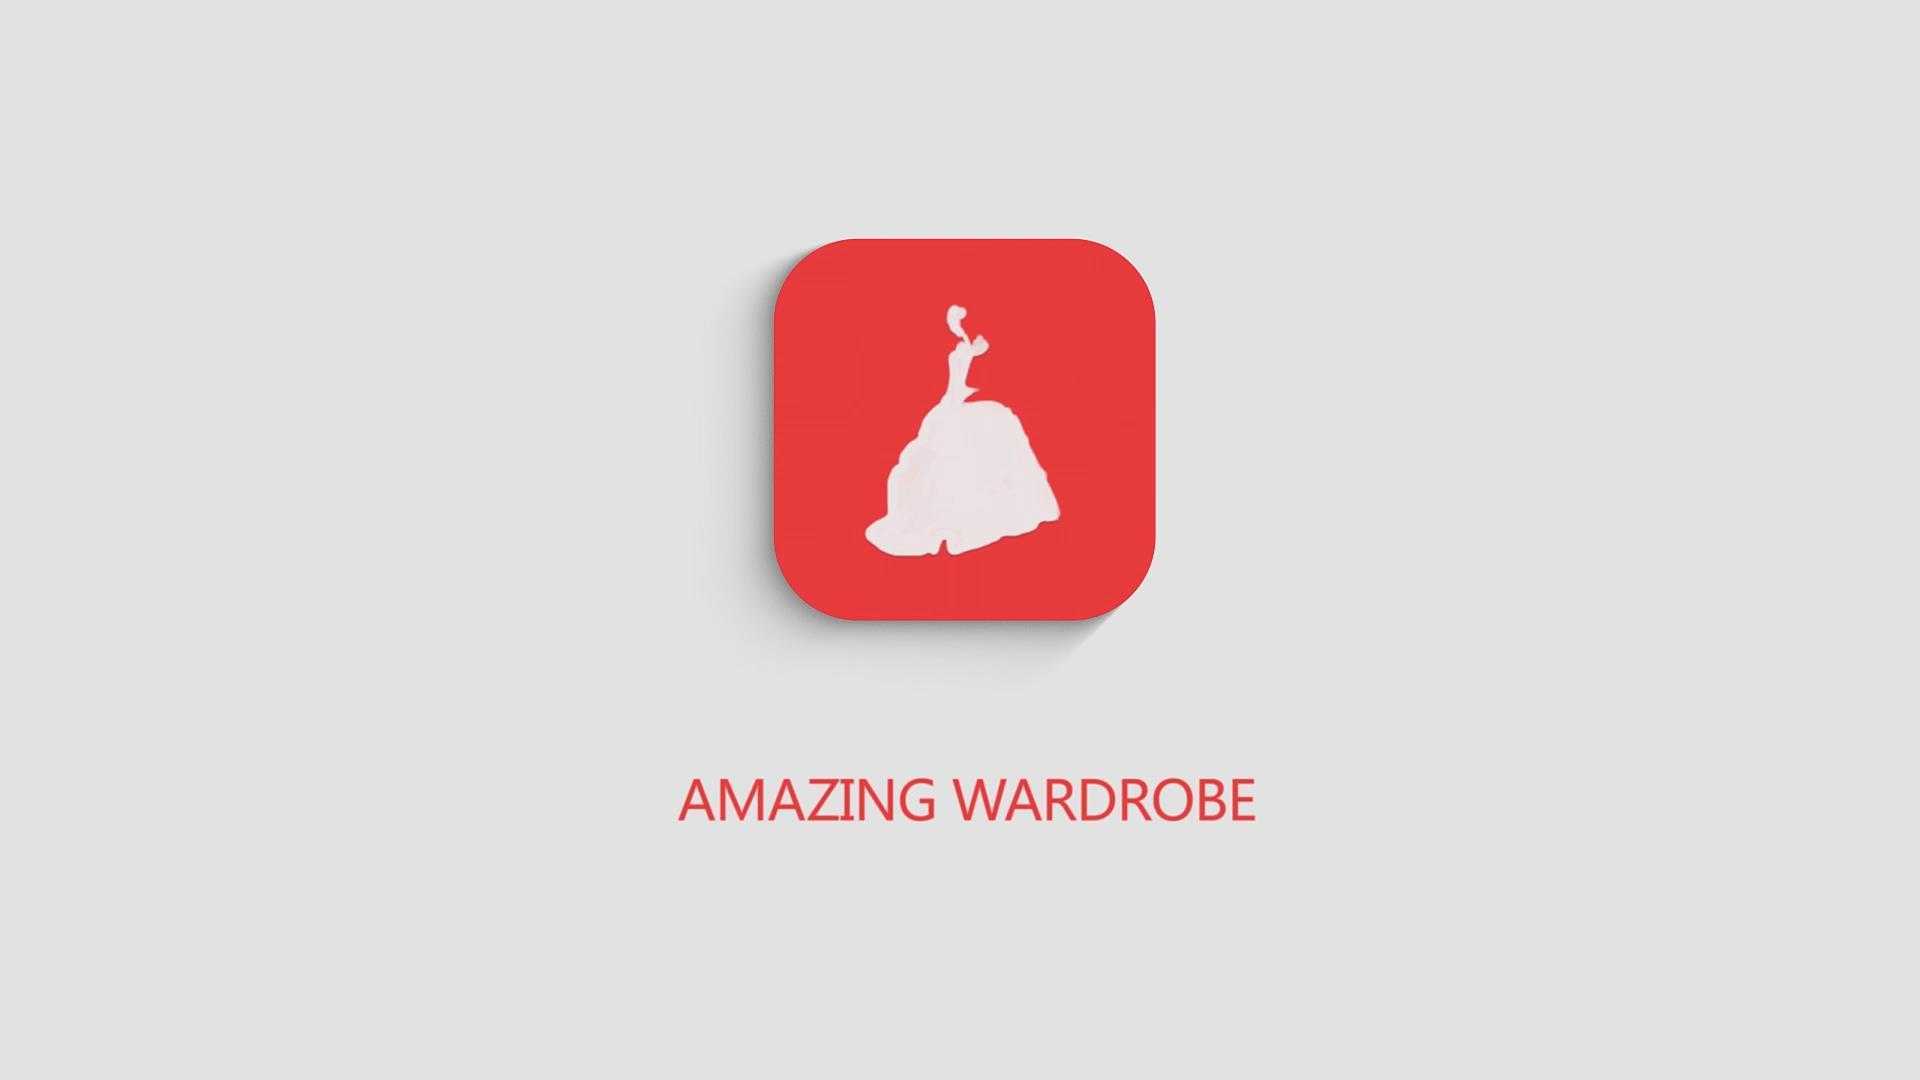 “Amazing wardrobe”